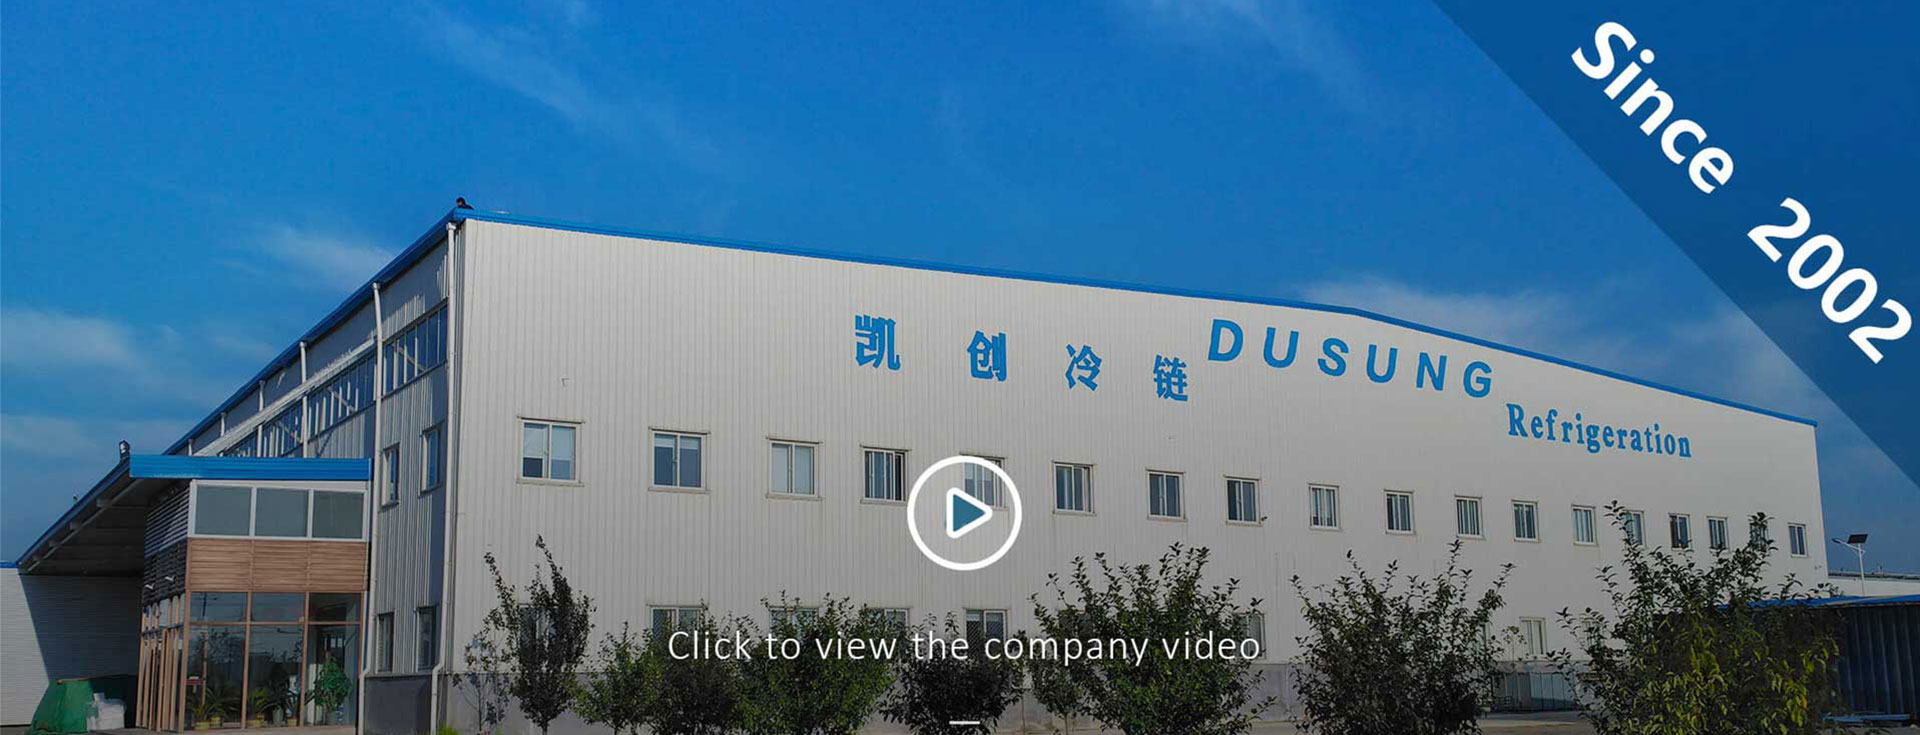 dusung commercial refrigeration manufacturer